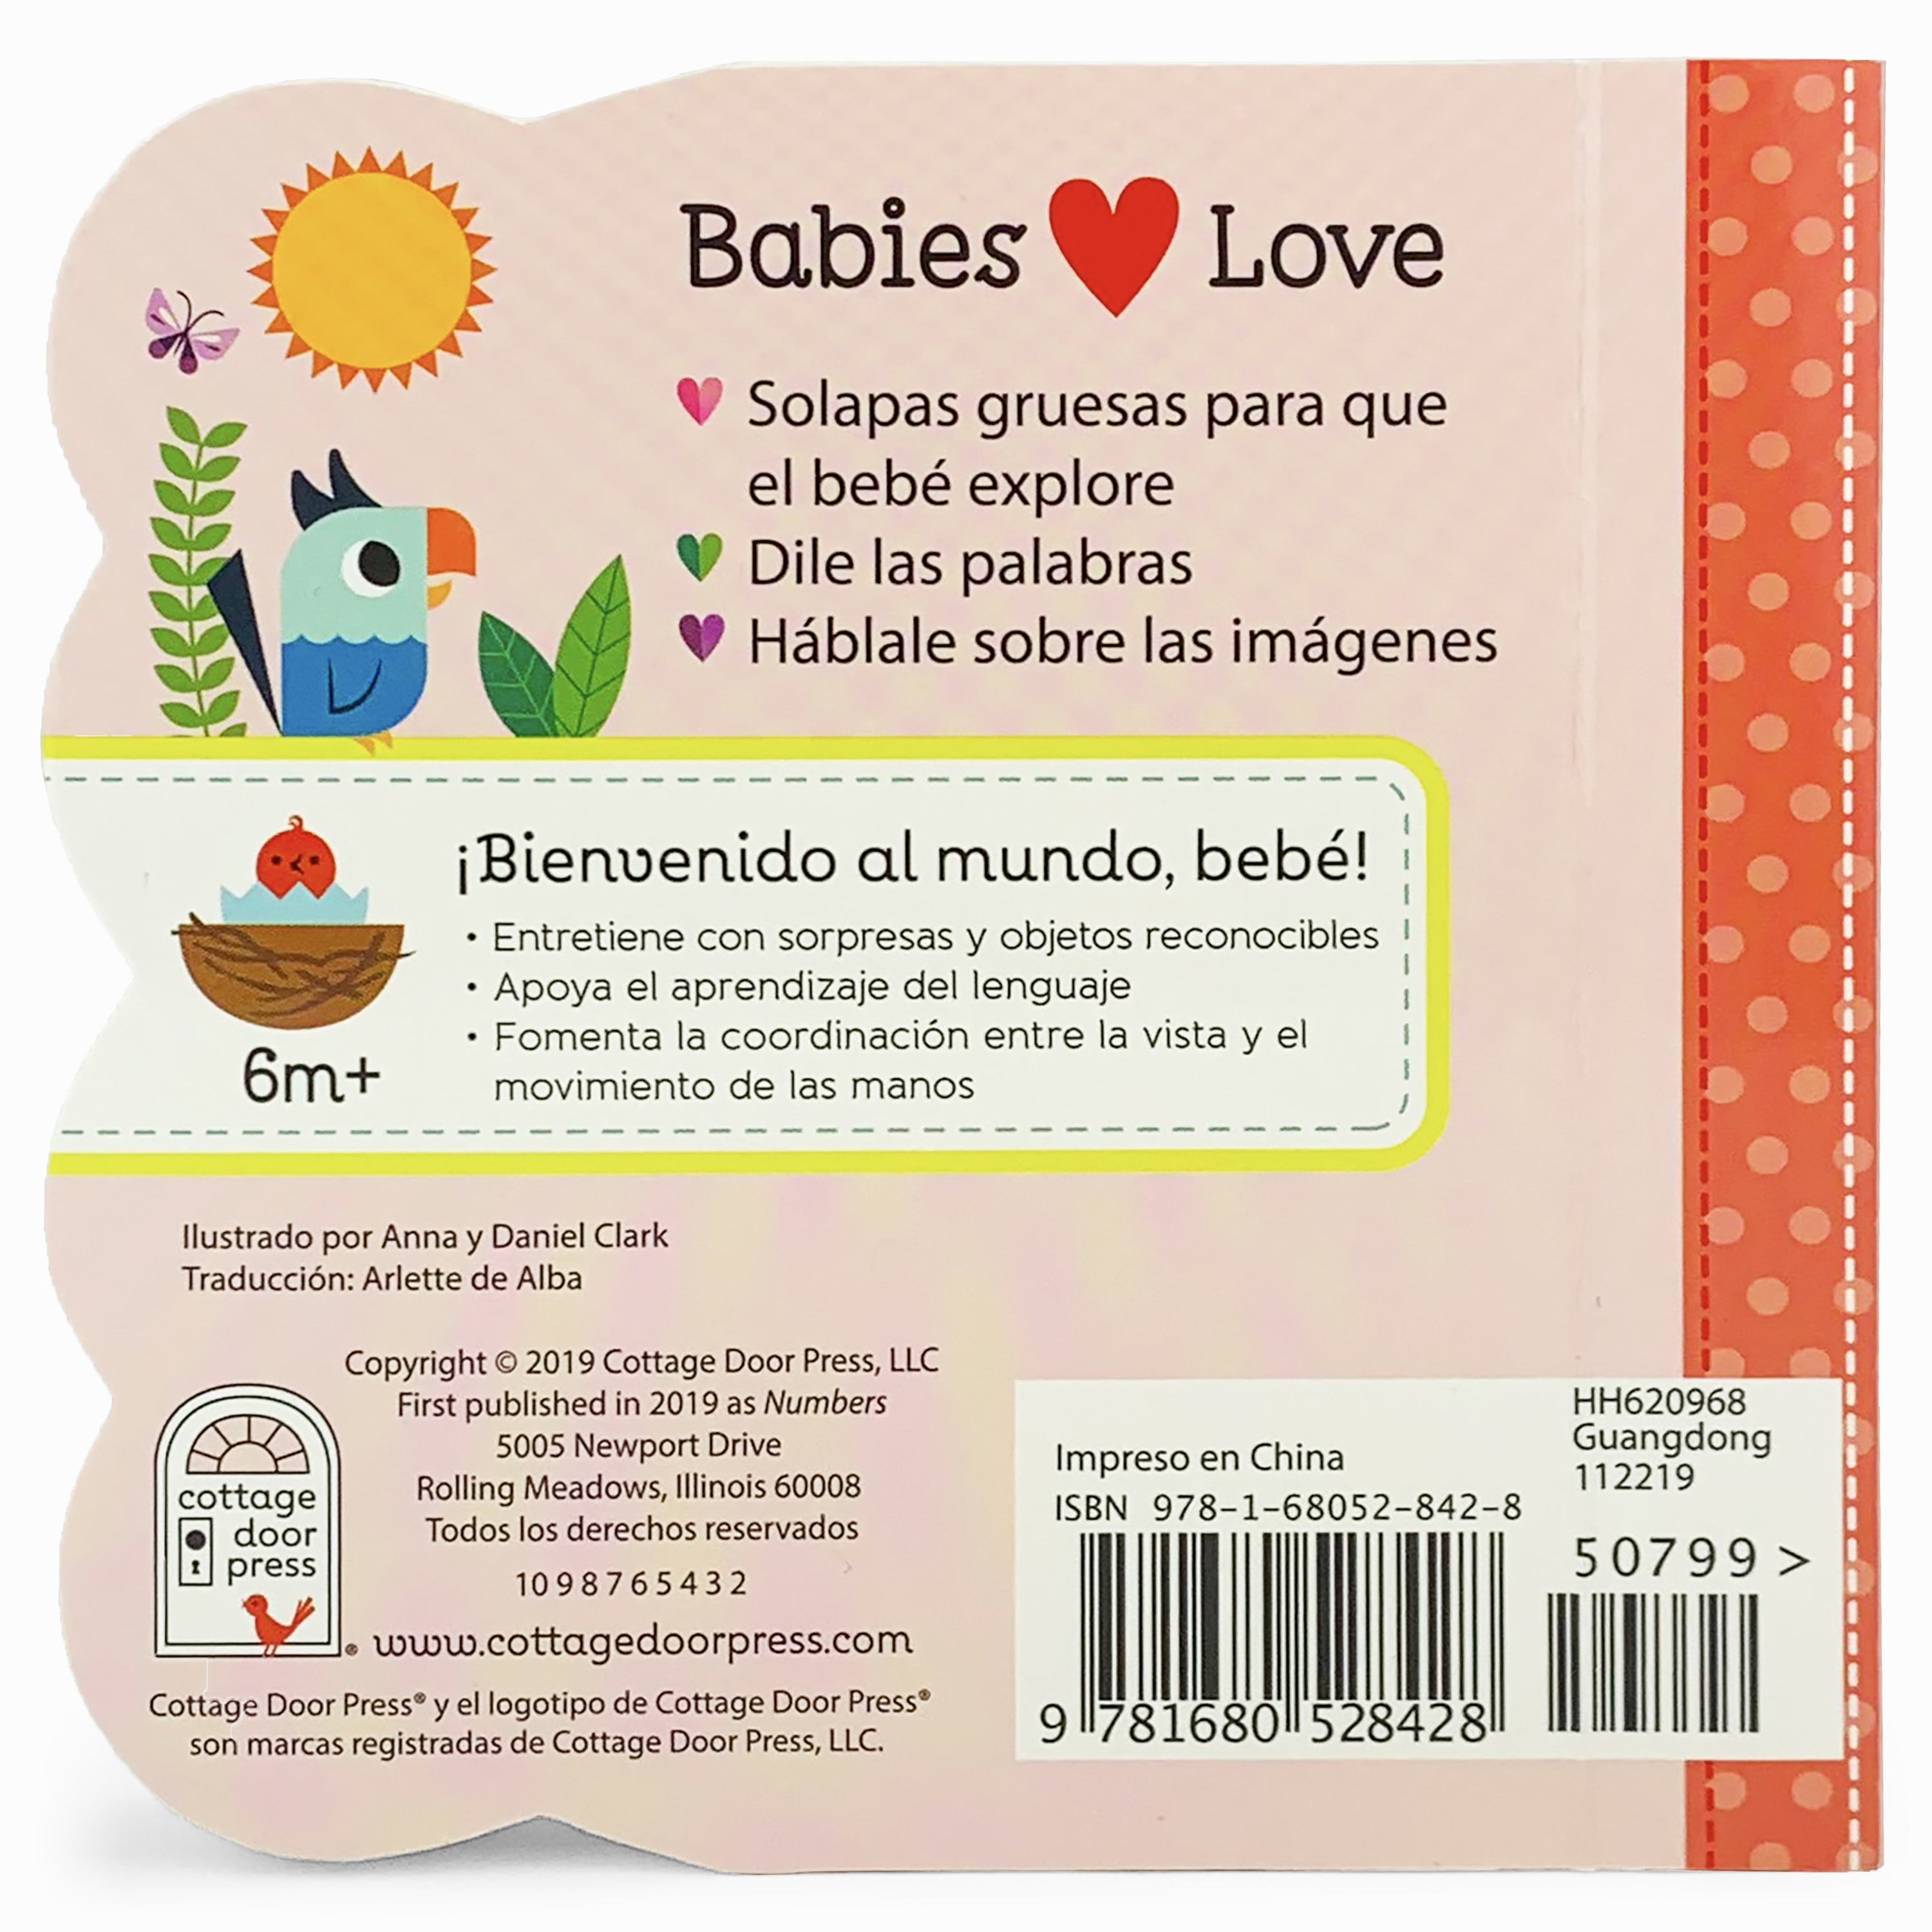 Babies Love Numeros / Babies Love Numbers (Spanish Edition)